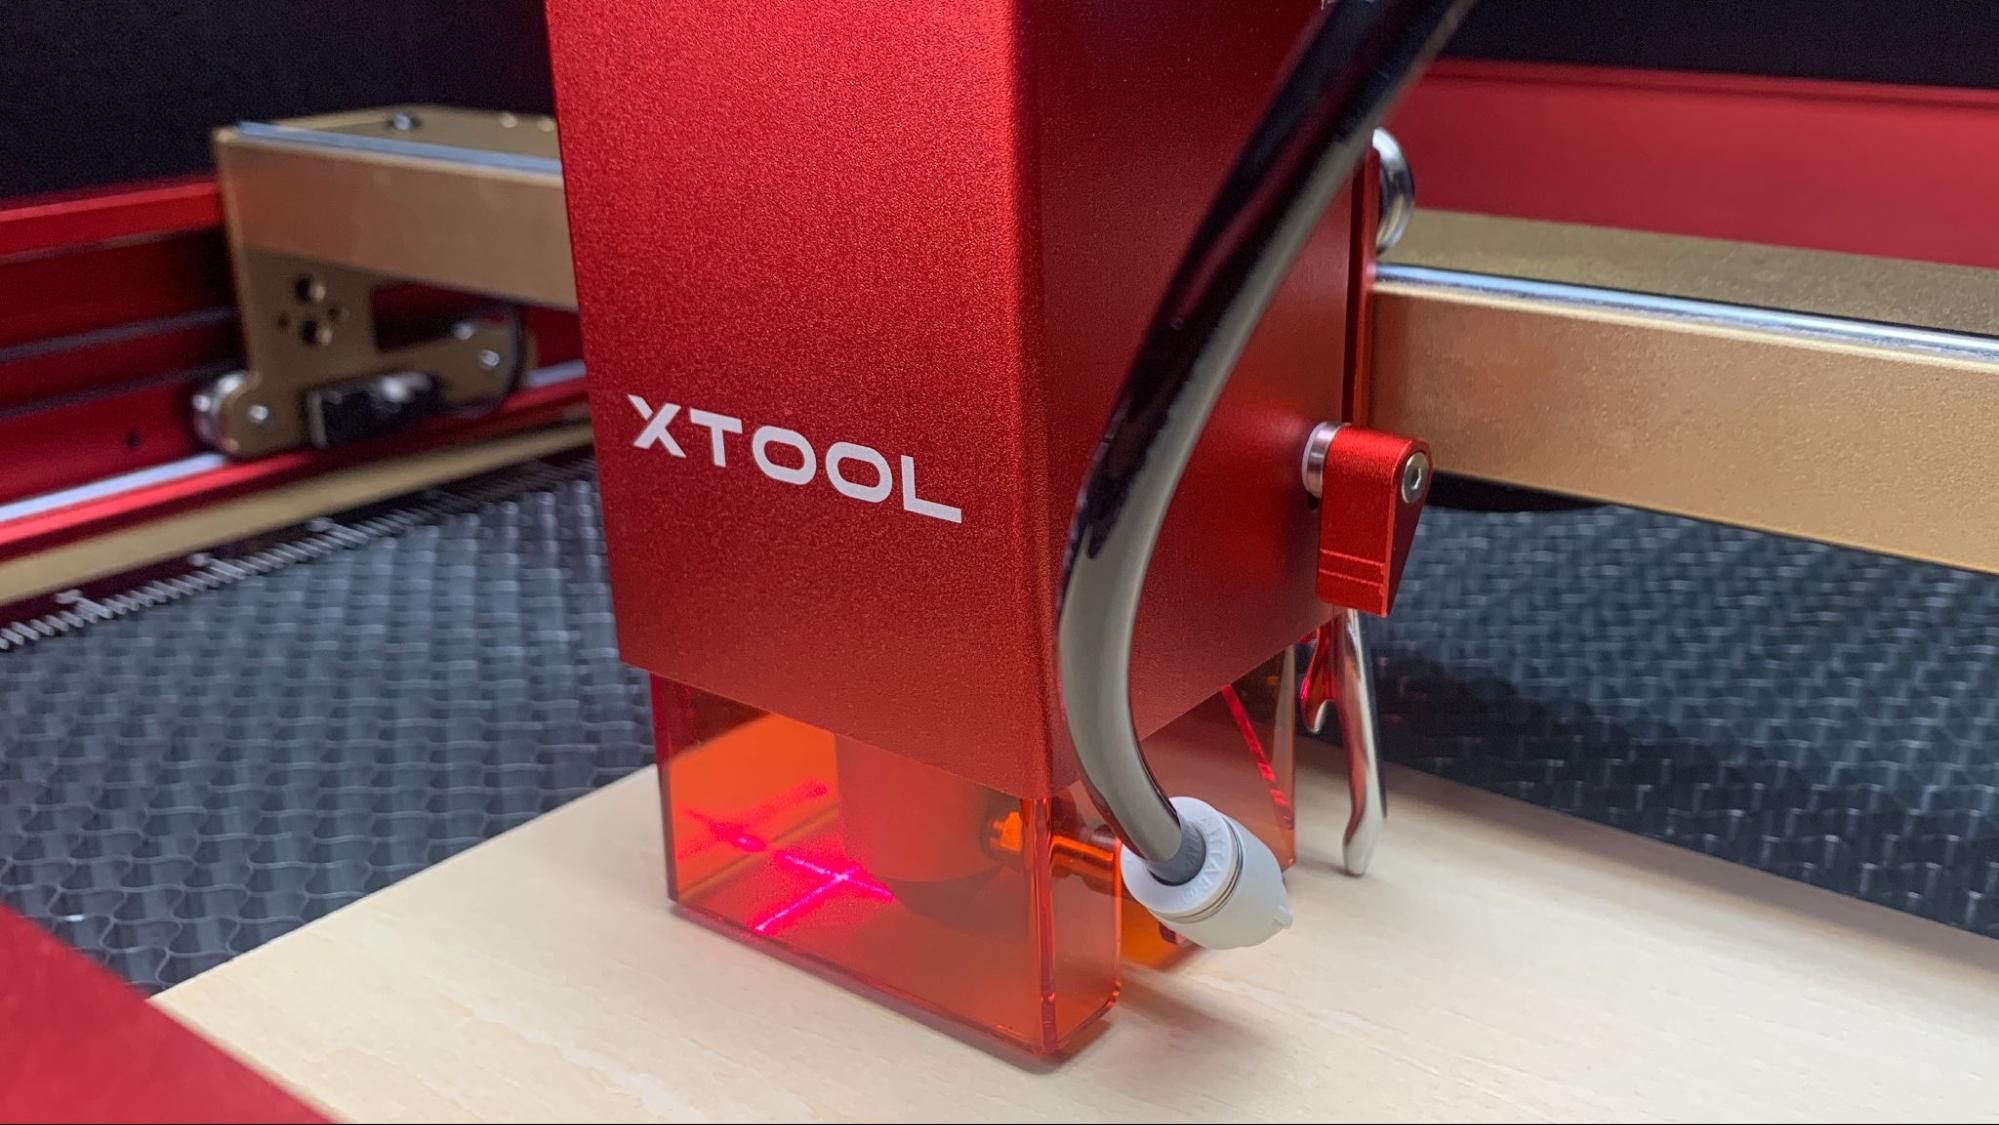 20W Laser Head for xTool D1 Pro Laser Engraver For Laser Engraving